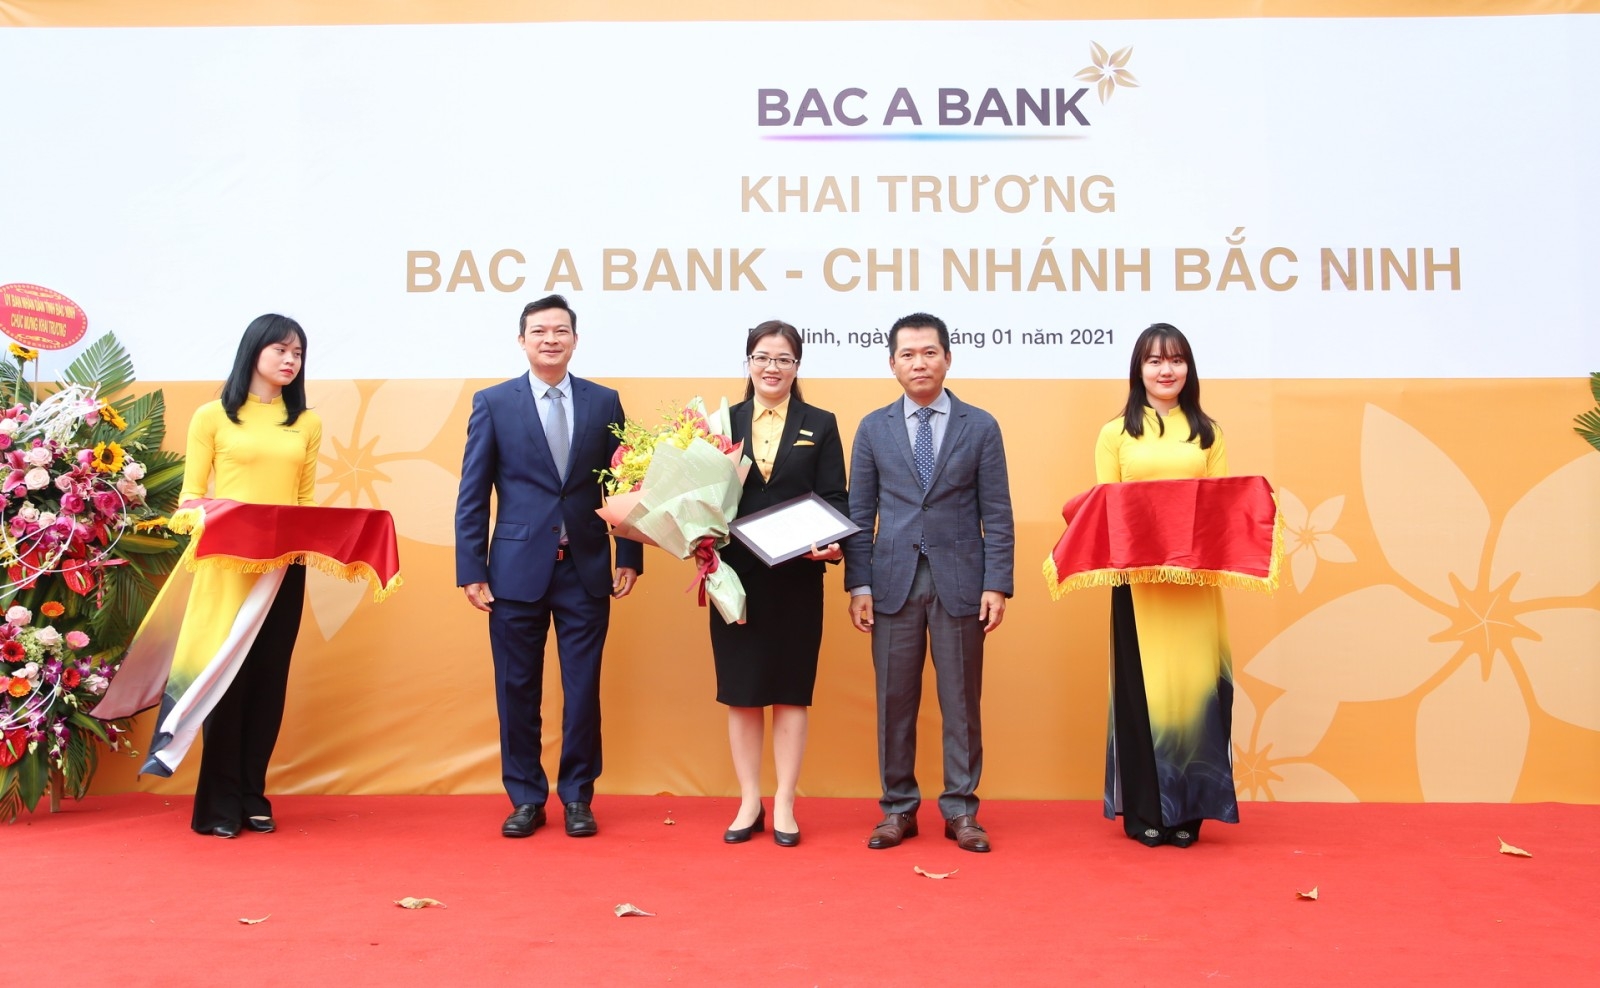 BAC A BANK joins financial market in Bac Ninh